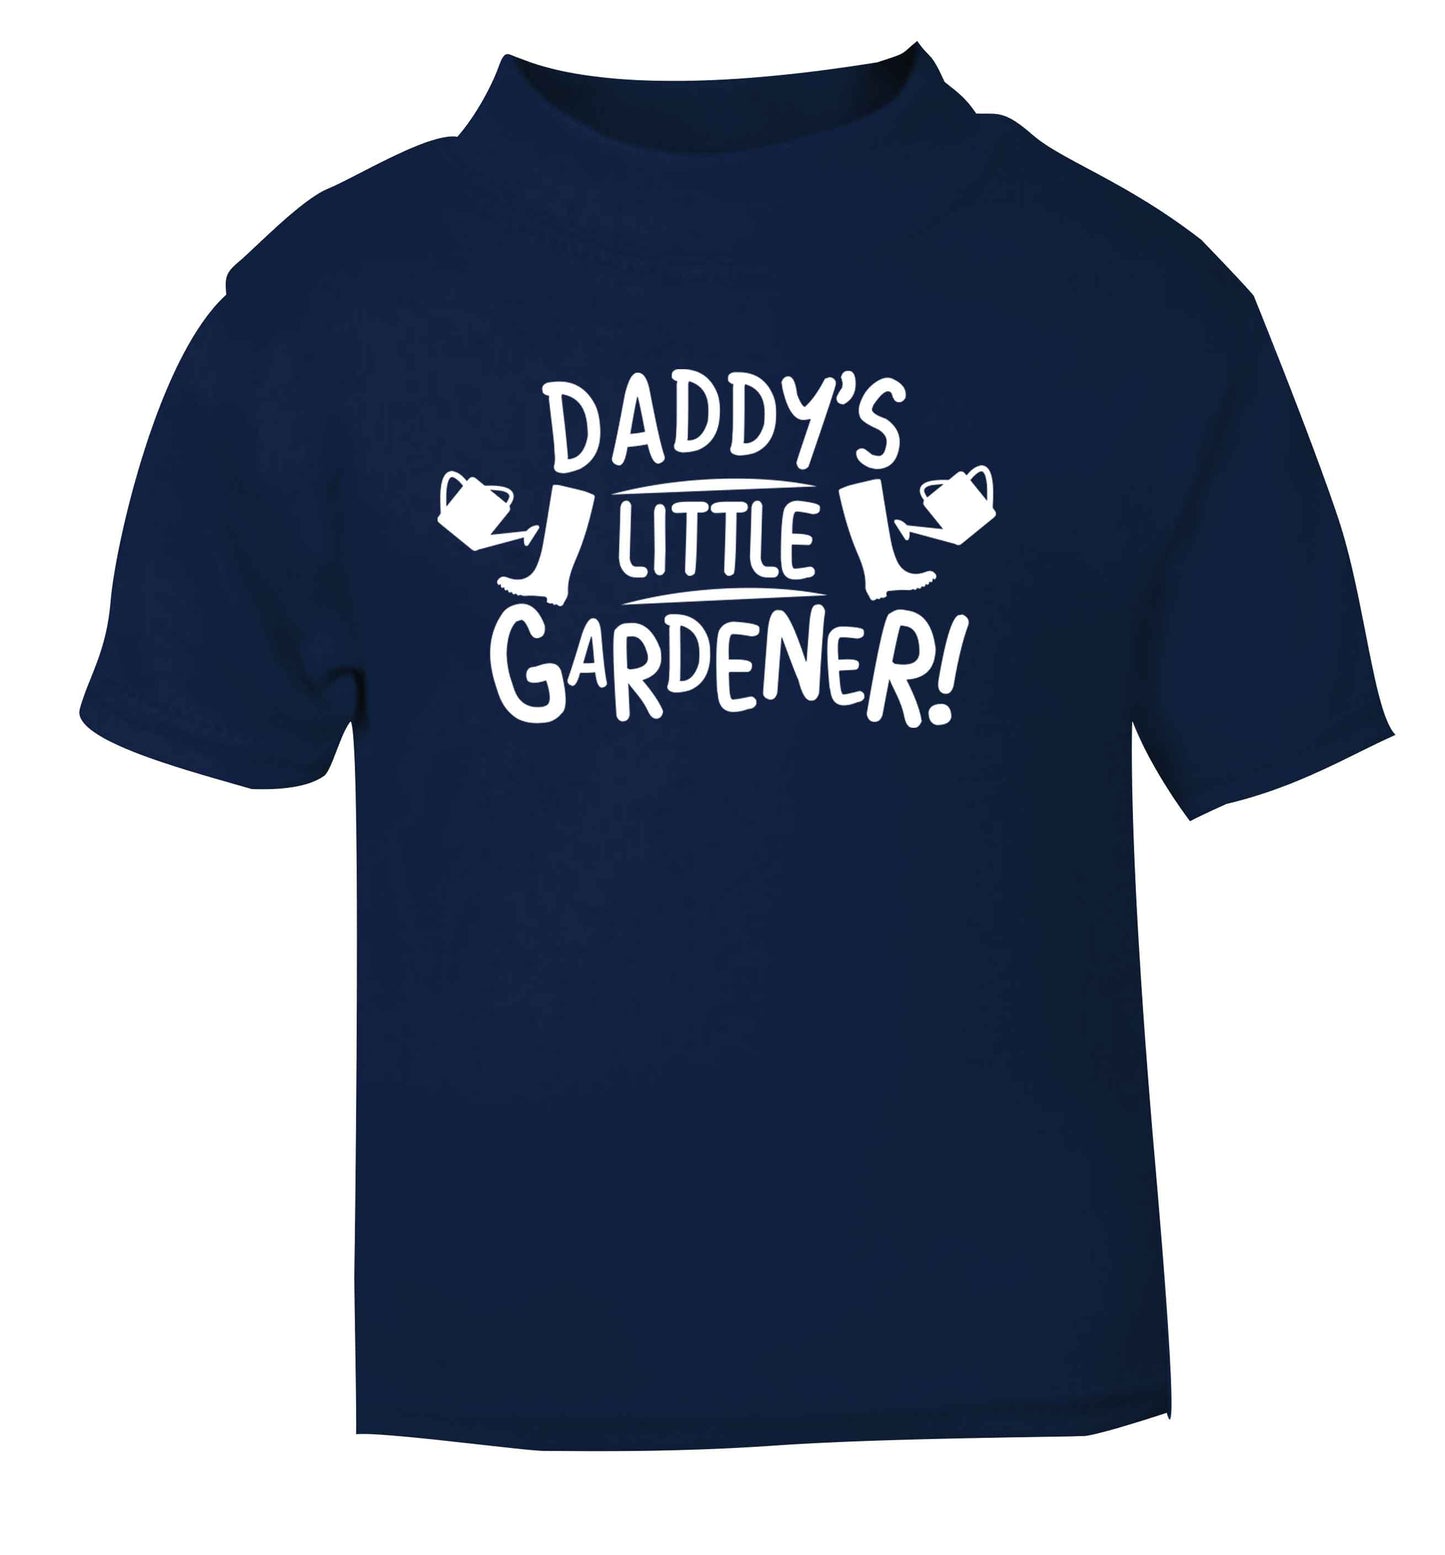 Daddy's little gardener navy Baby Toddler Tshirt 2 Years